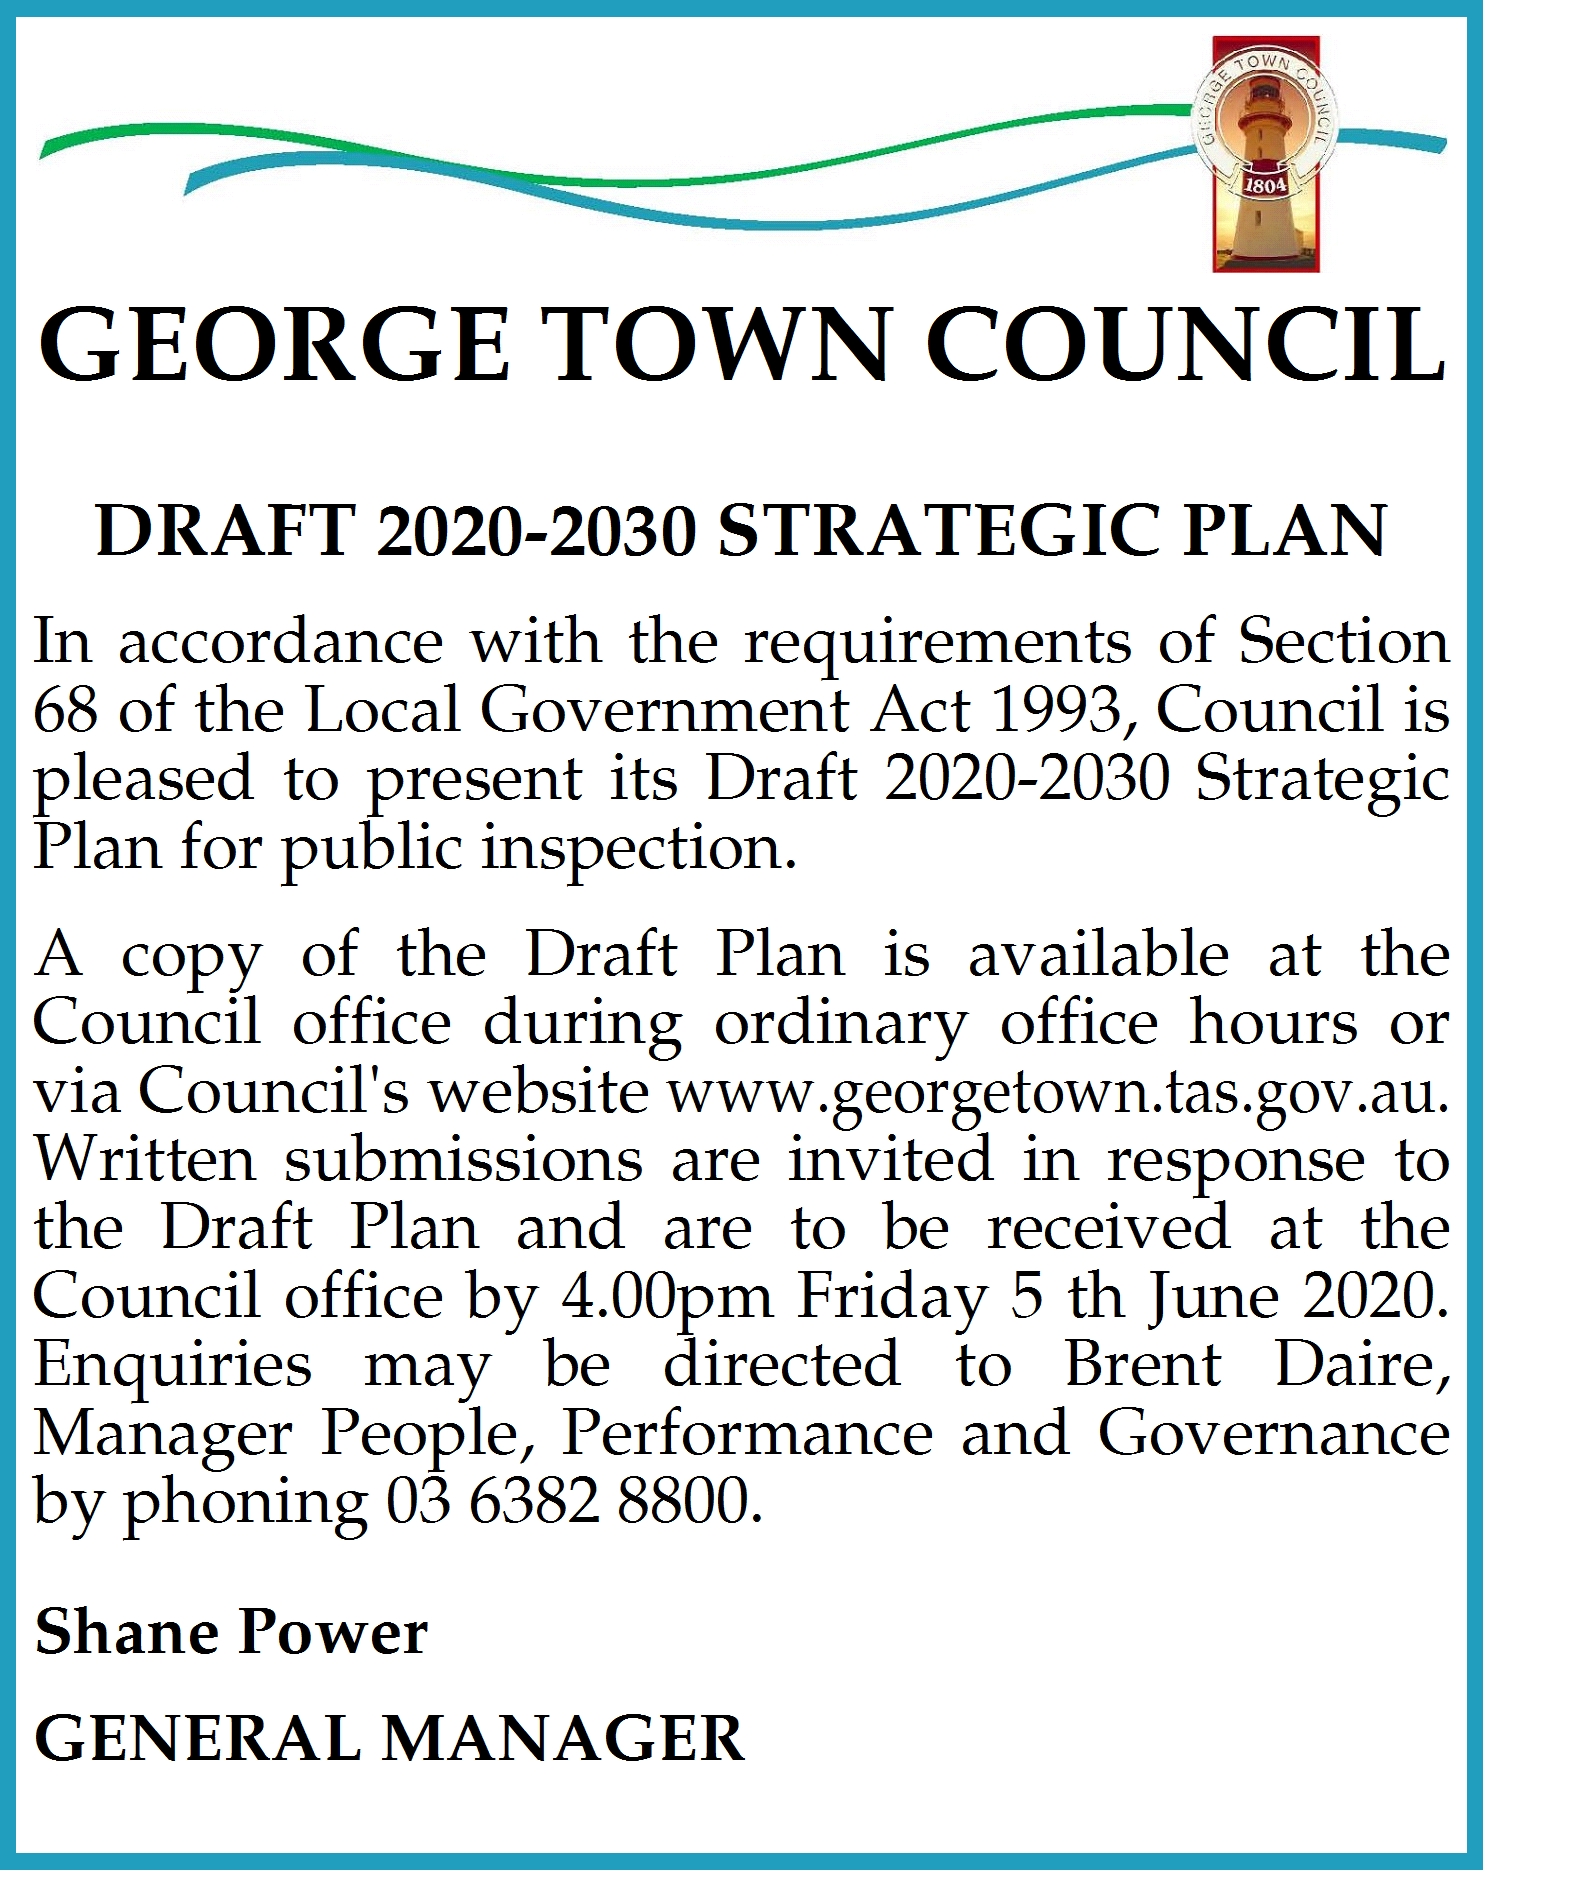 Draft Community Strategic Plan 2020-2030